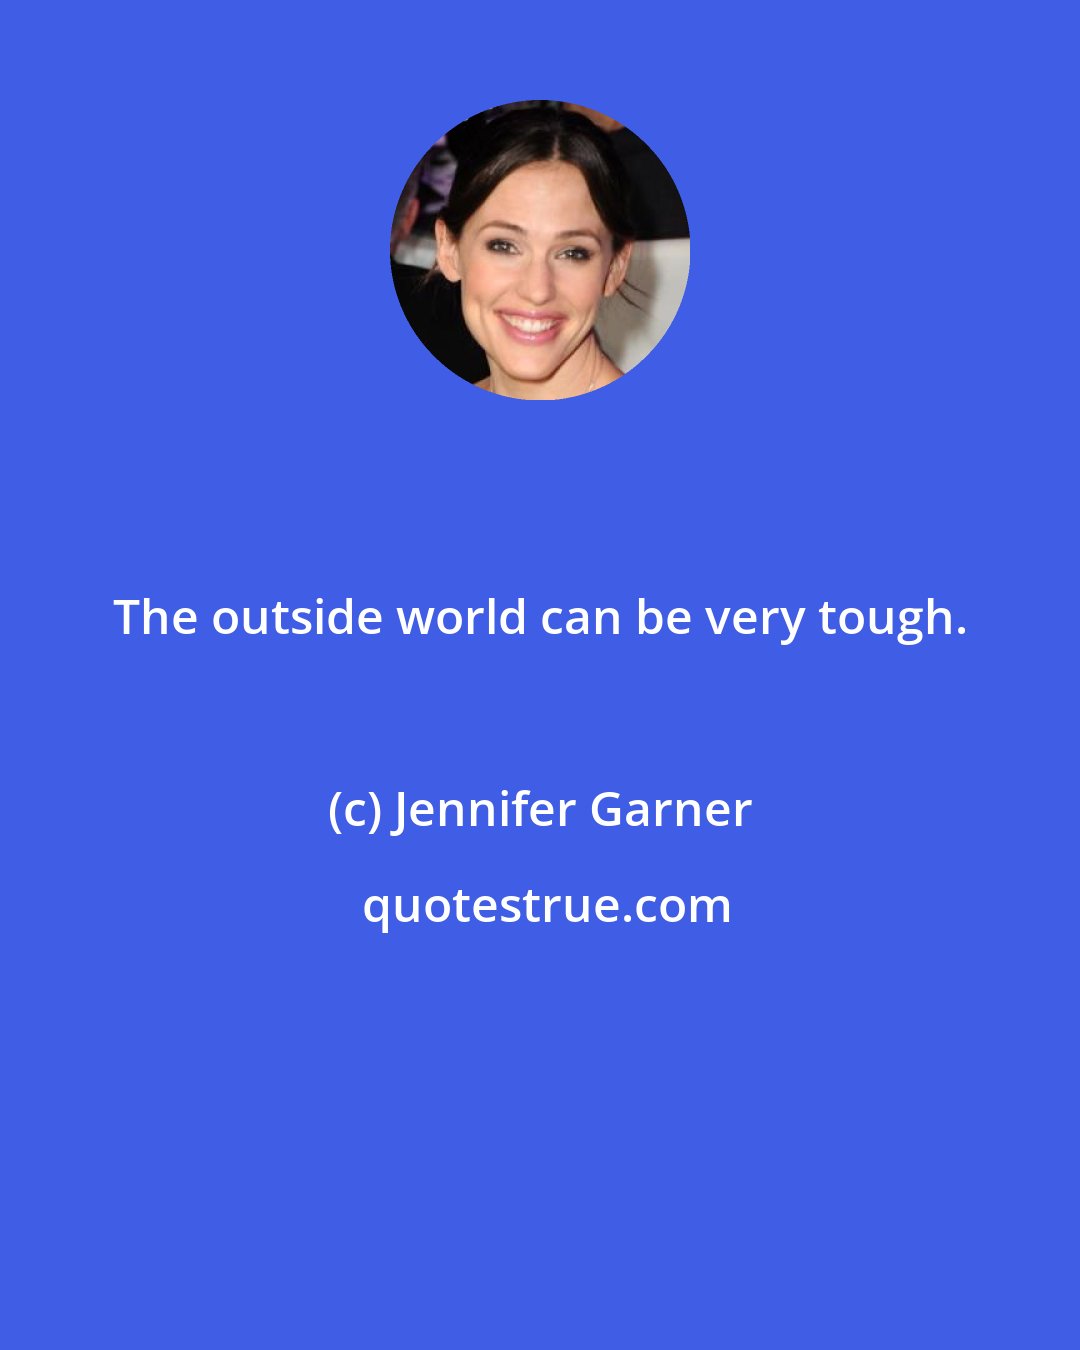 Jennifer Garner: The outside world can be very tough.